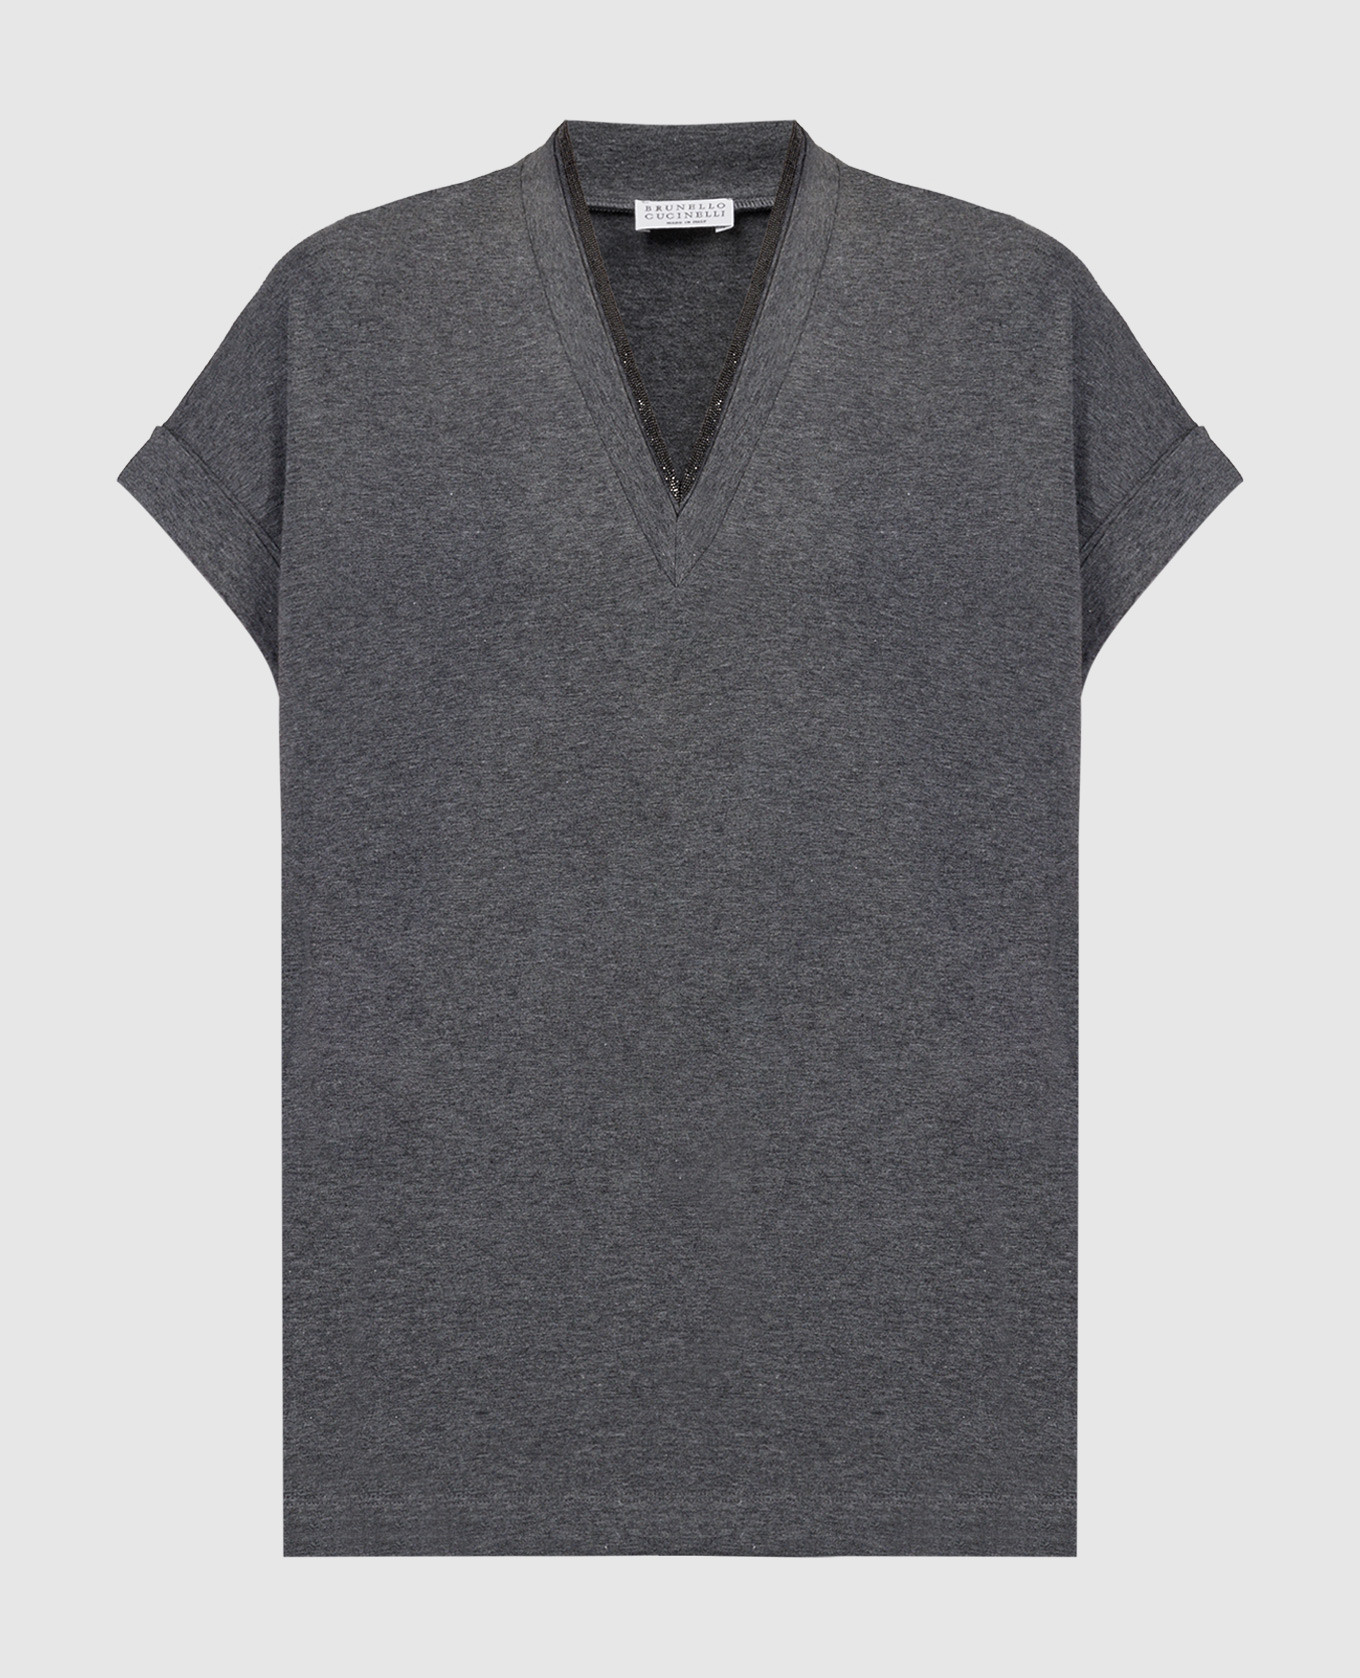 Gray t-shirt with monil chain